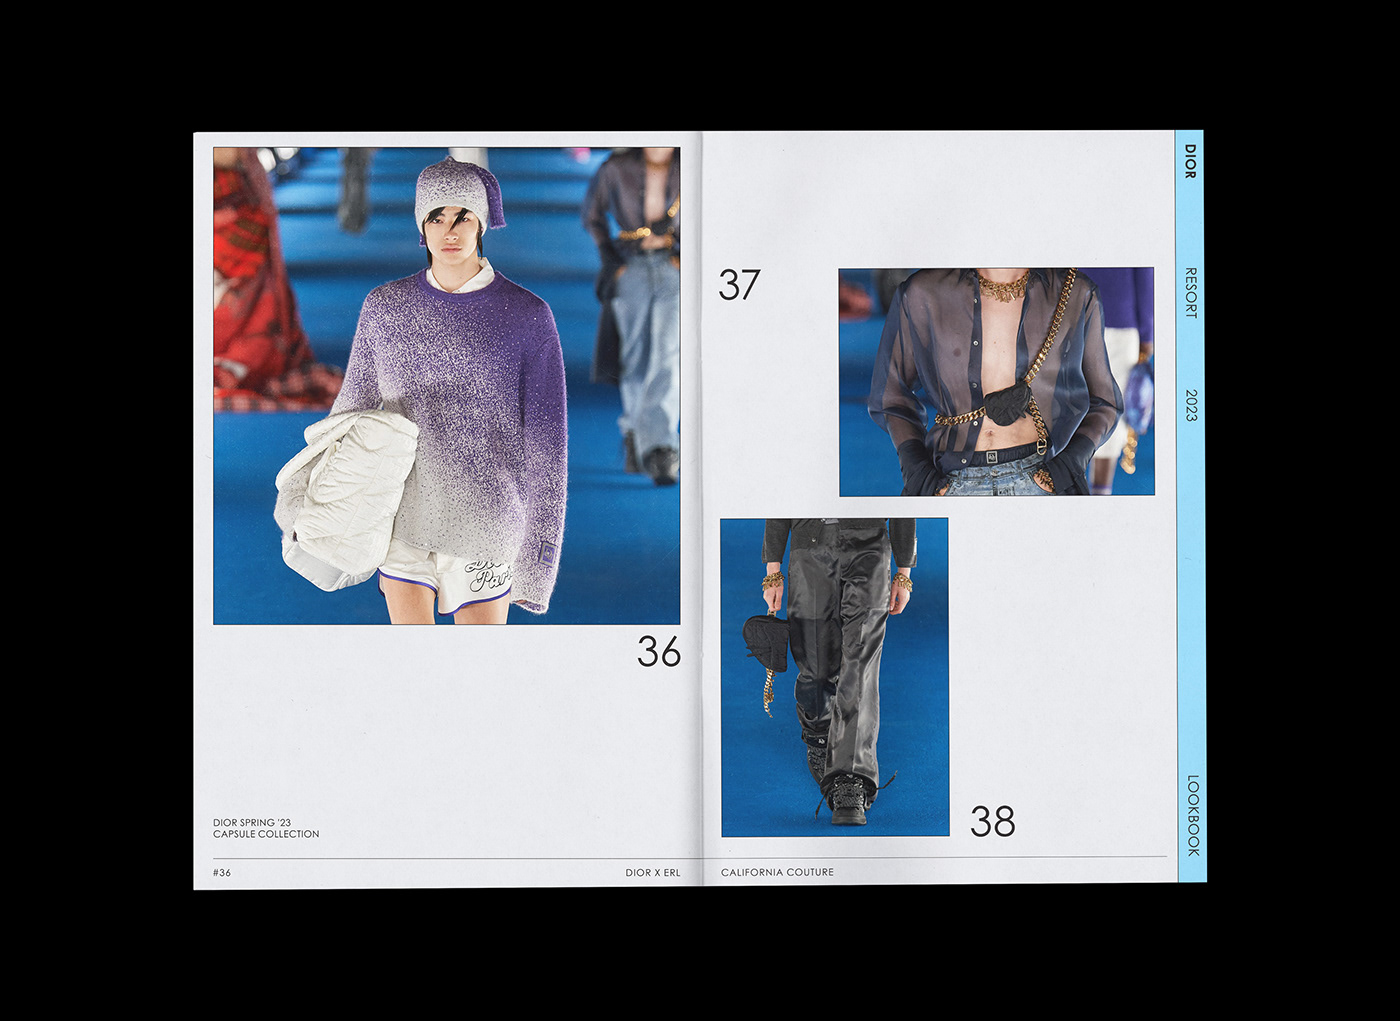 Dior x ERL — Resort 2023 Lookbook Looks